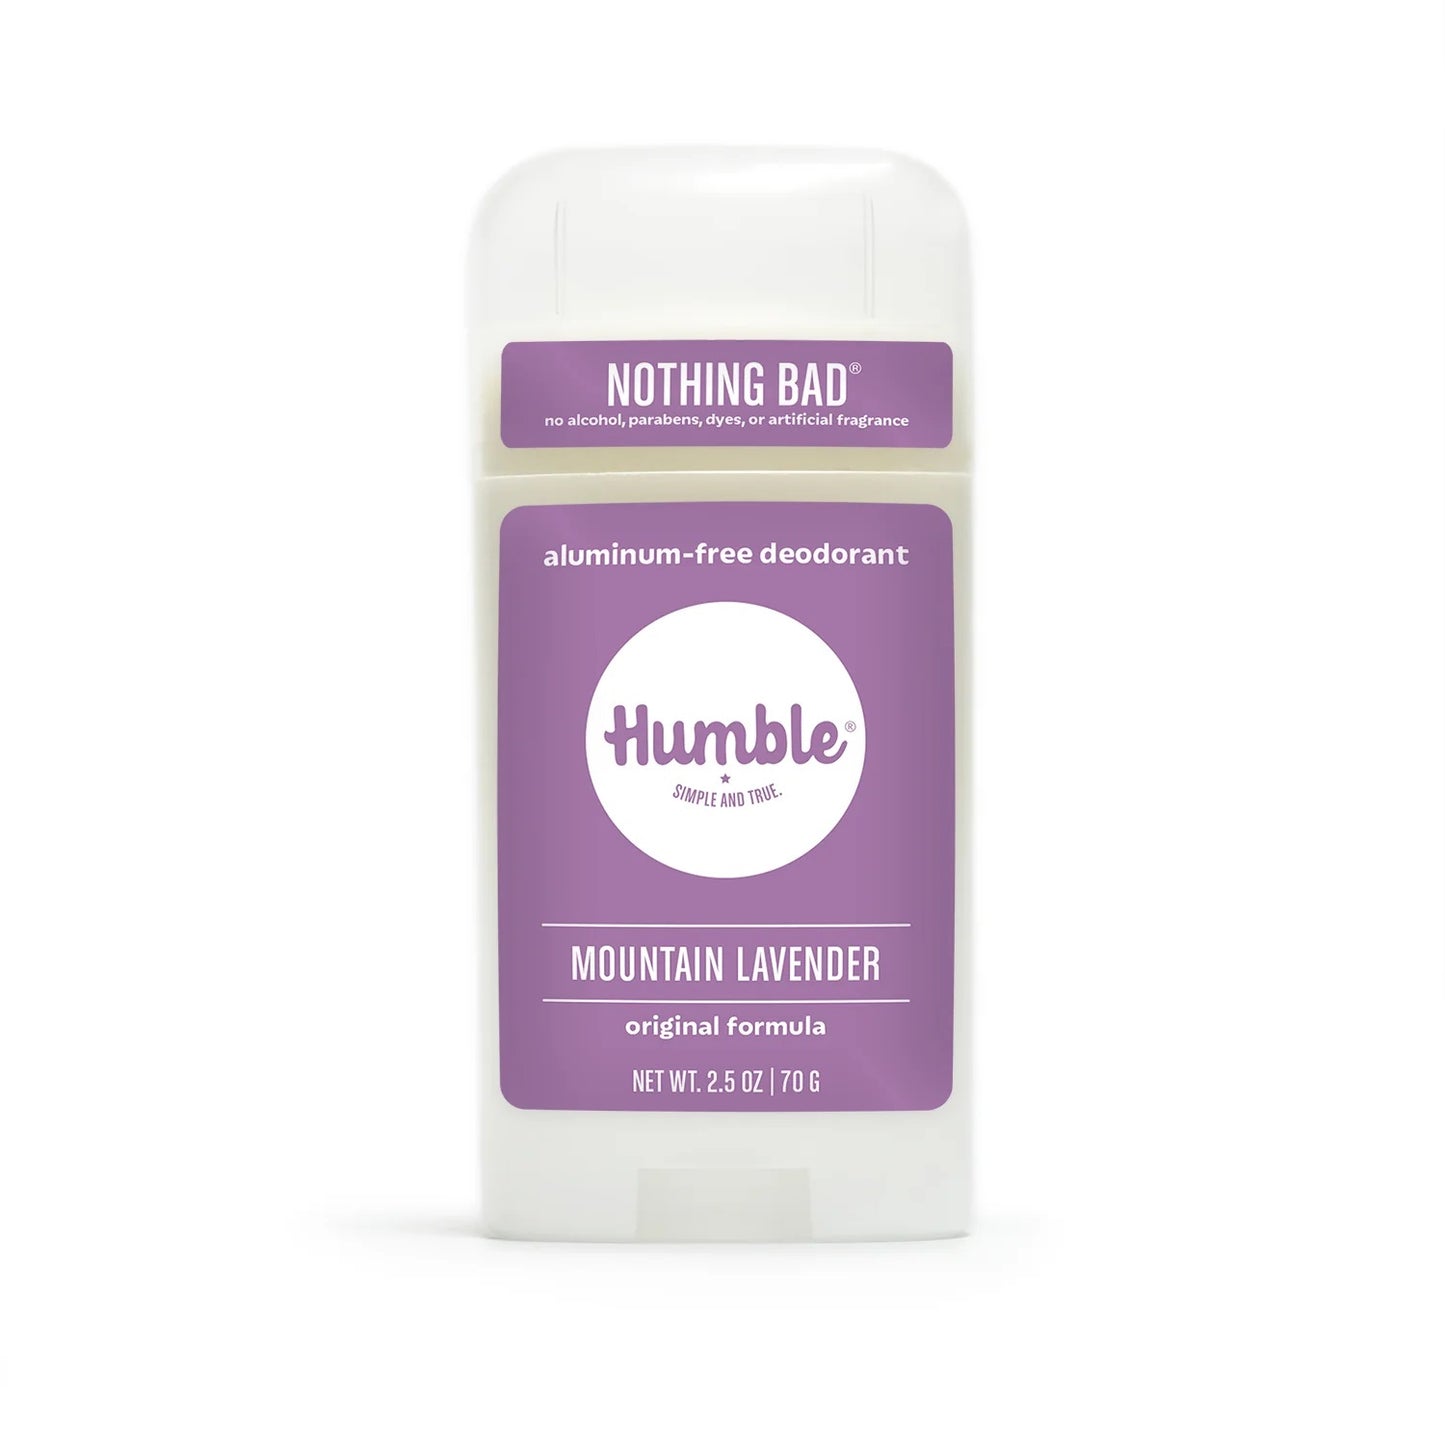 HUMBLE DEODORANT Mountain Lavender Deodorant full size